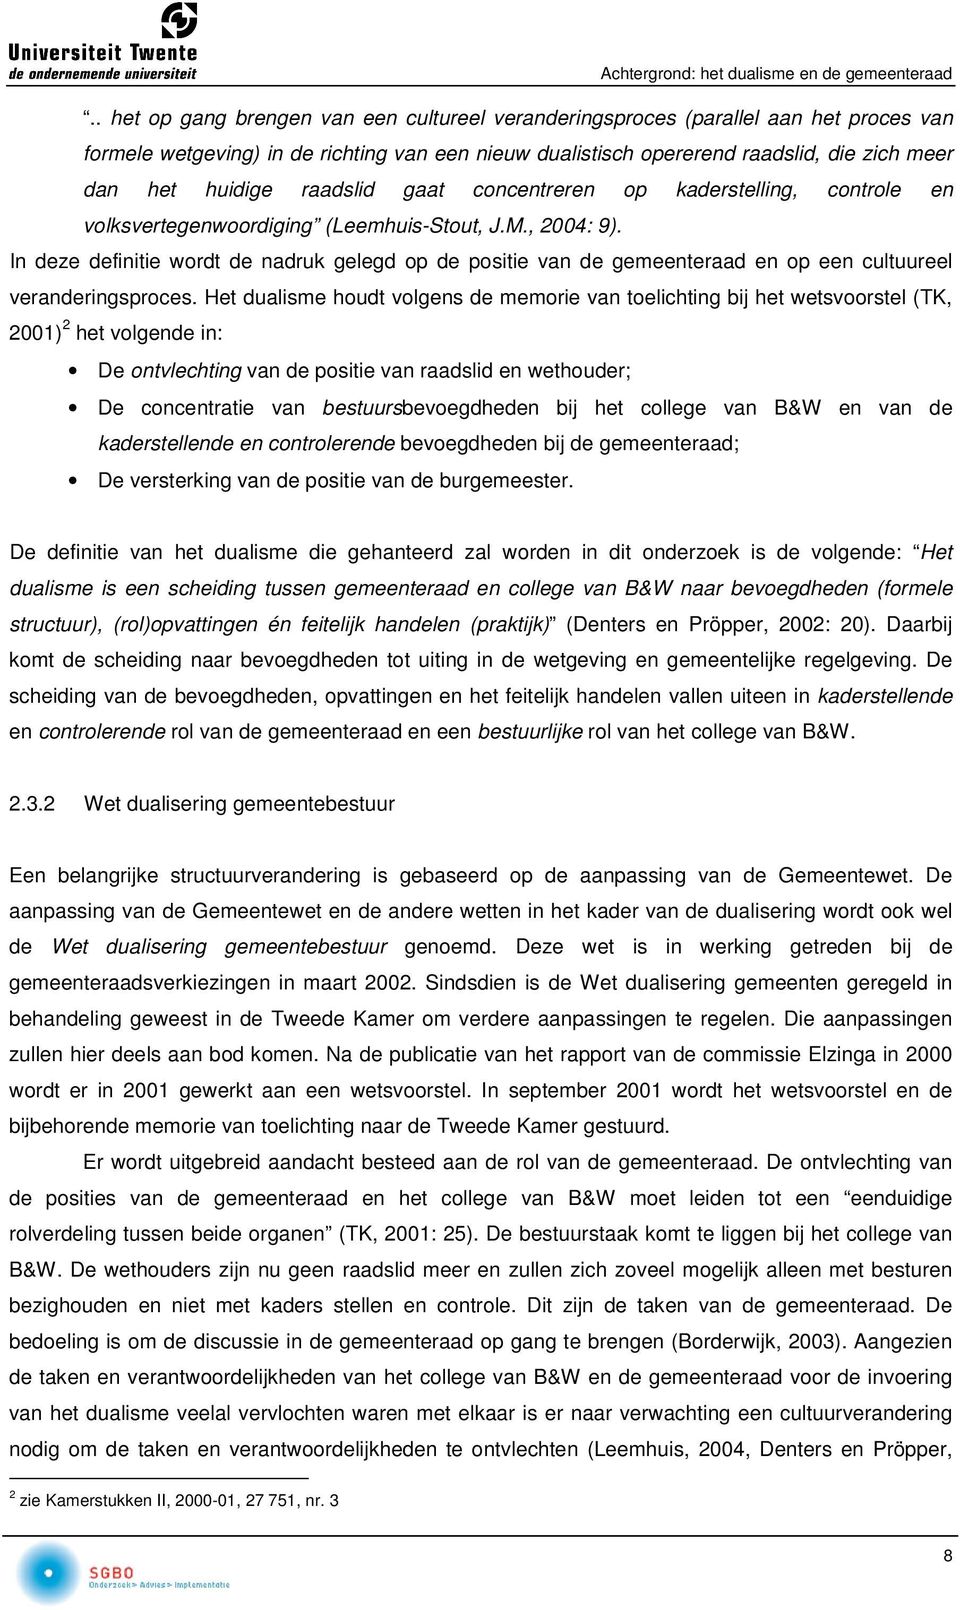 raadslid gaat concentreren op kaderstelling, controle en volksvertegenwoordiging (Leemhuis-Stout, J.M., 2004: 9).